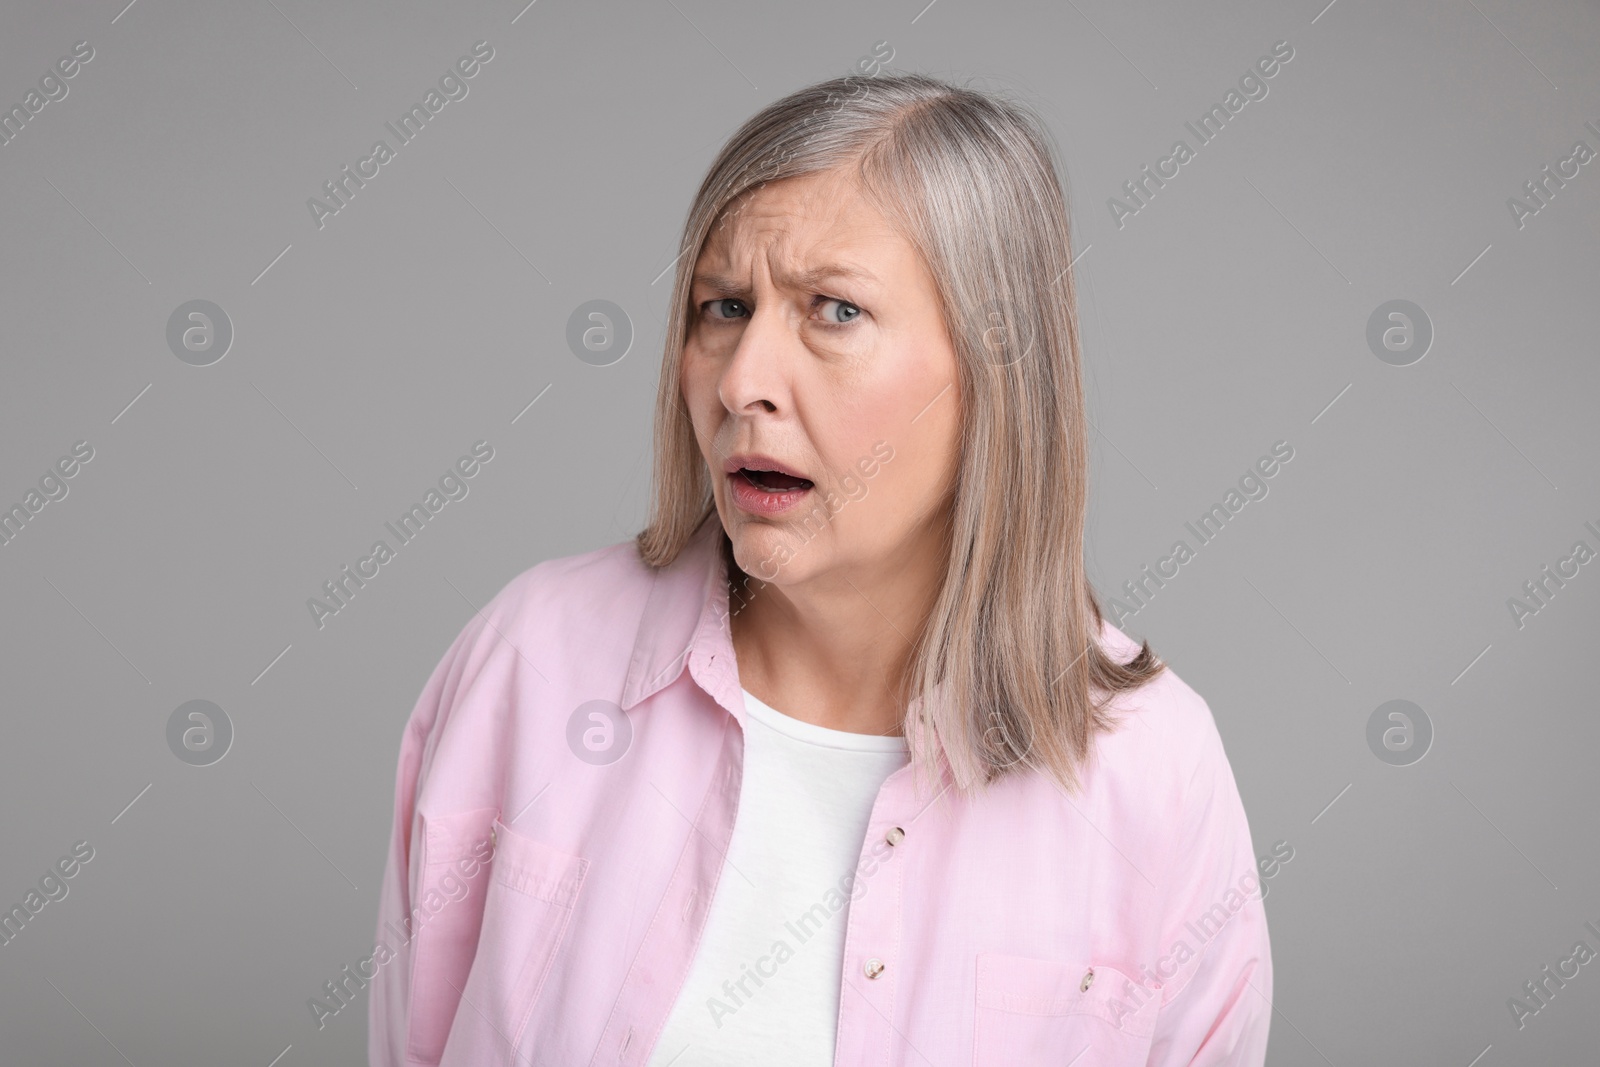 Photo of Portrait of surprised senior woman on grey background